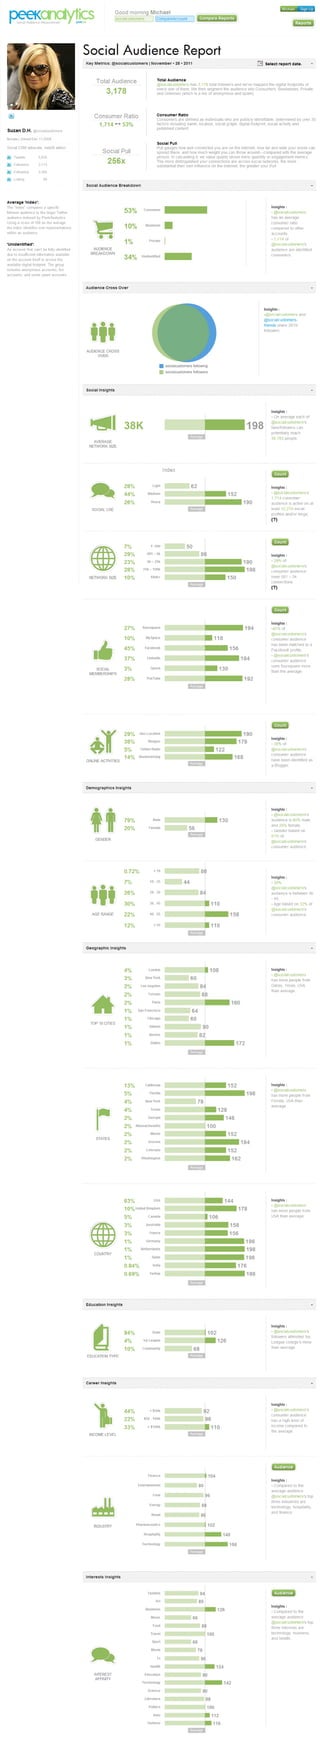 PeekAnalytics - Social Audience Report for @socialcustomers